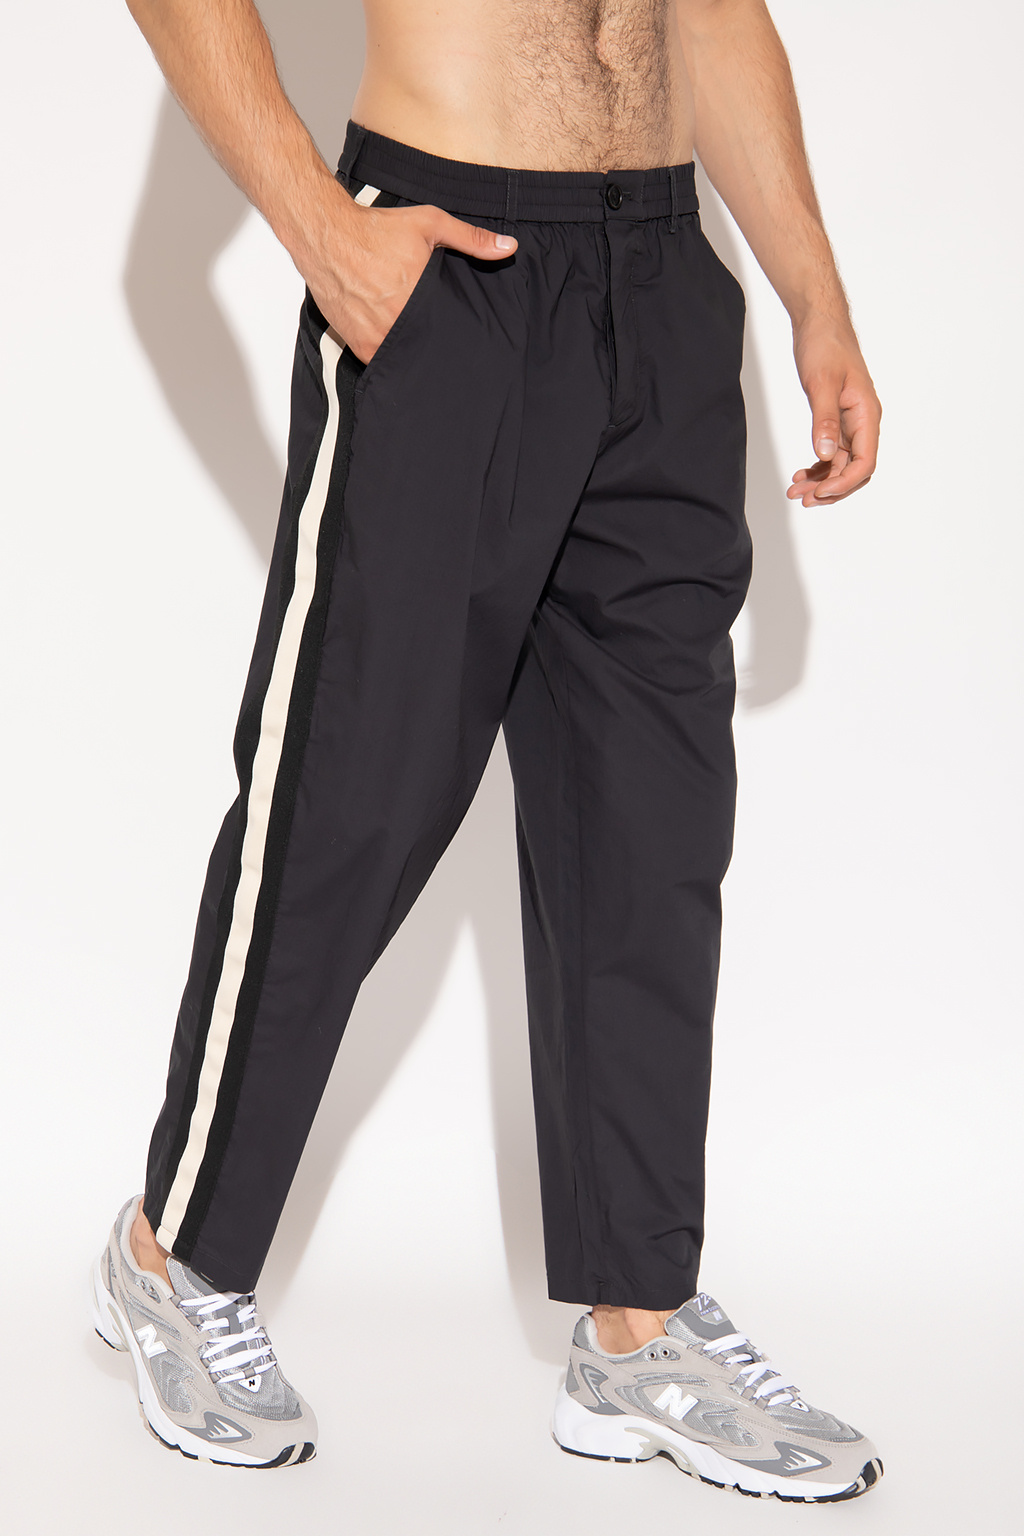 AllSaints ‘Pismo’ side-stripe trousers